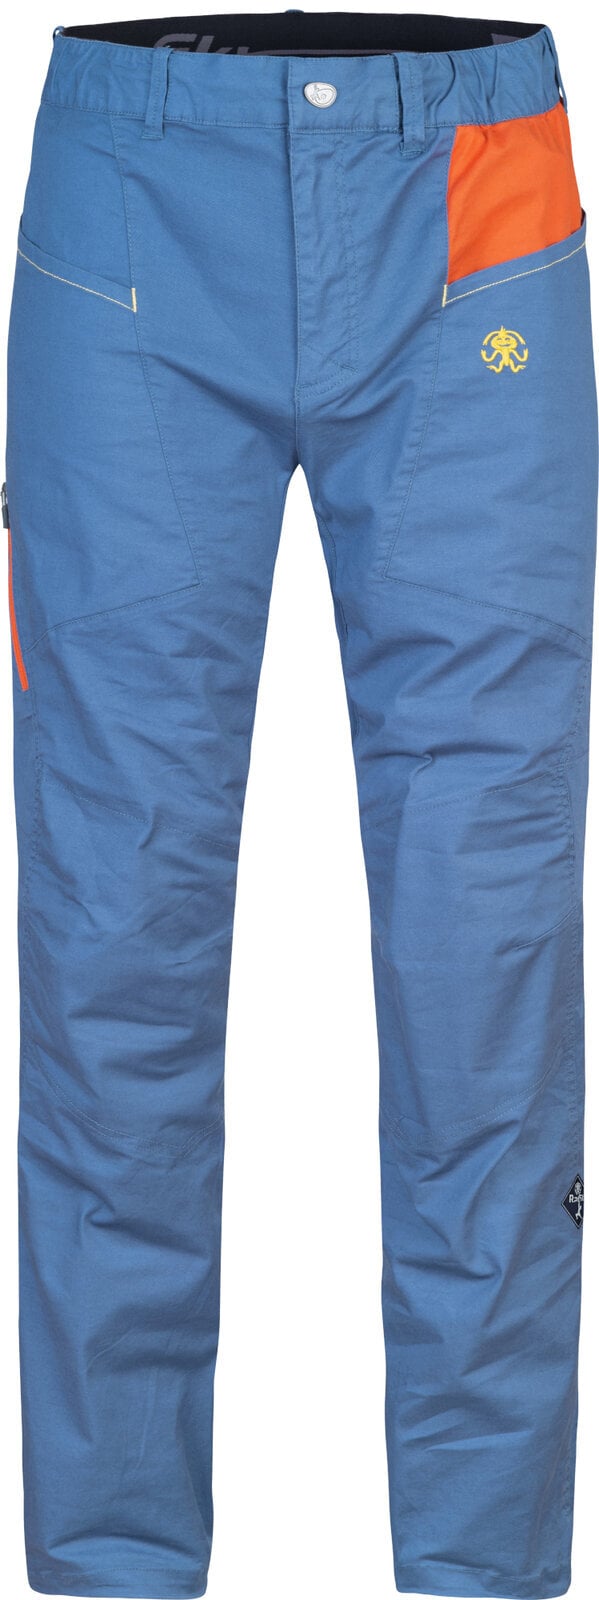 Outdoorbroek Rafiki Crag Man Pants Ensign Blue/Clay L Outdoorbroek